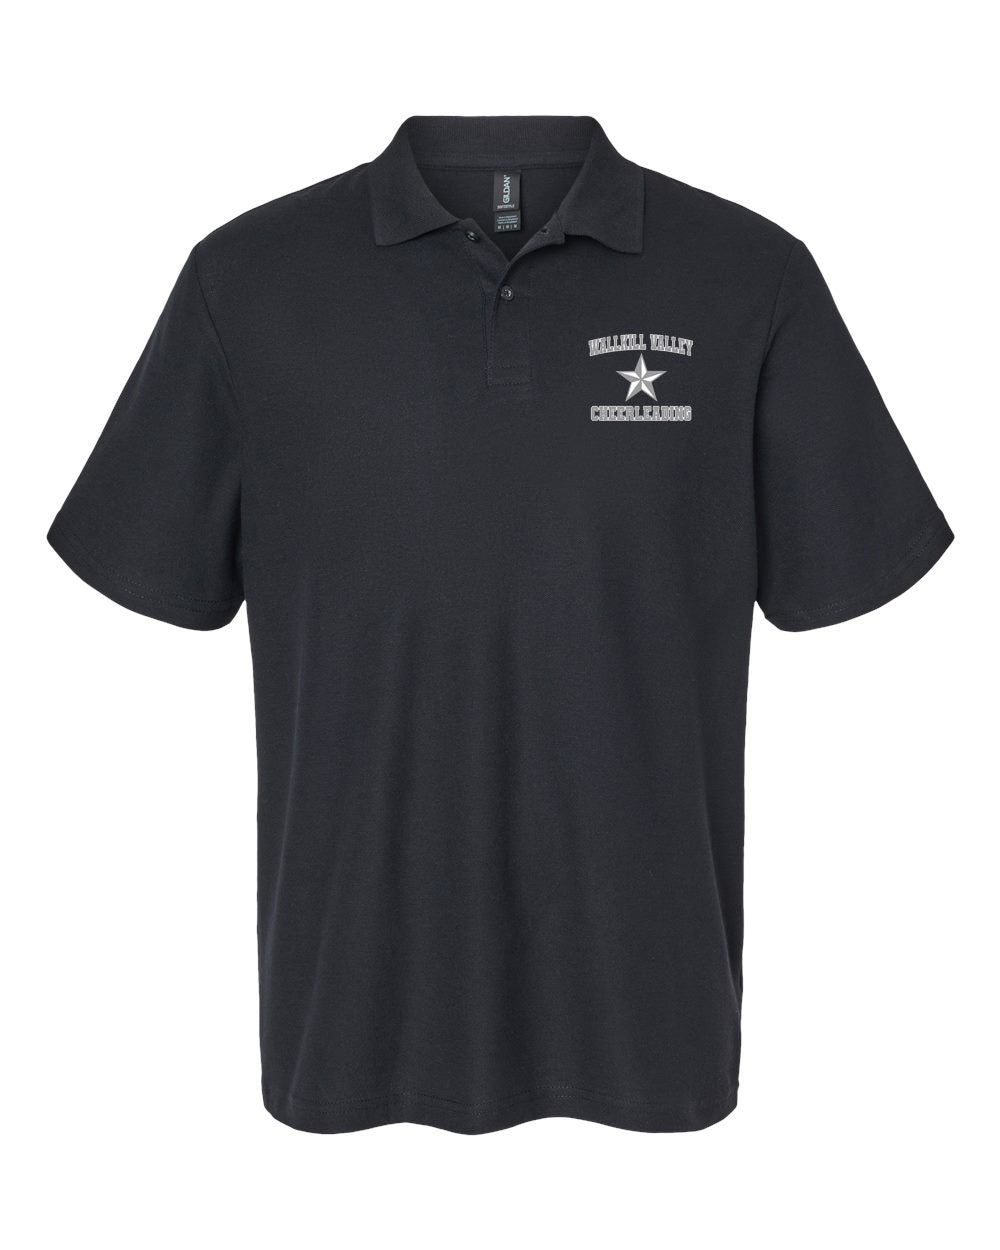 Wallkill Cheer Design 6 Polo T-Shirt